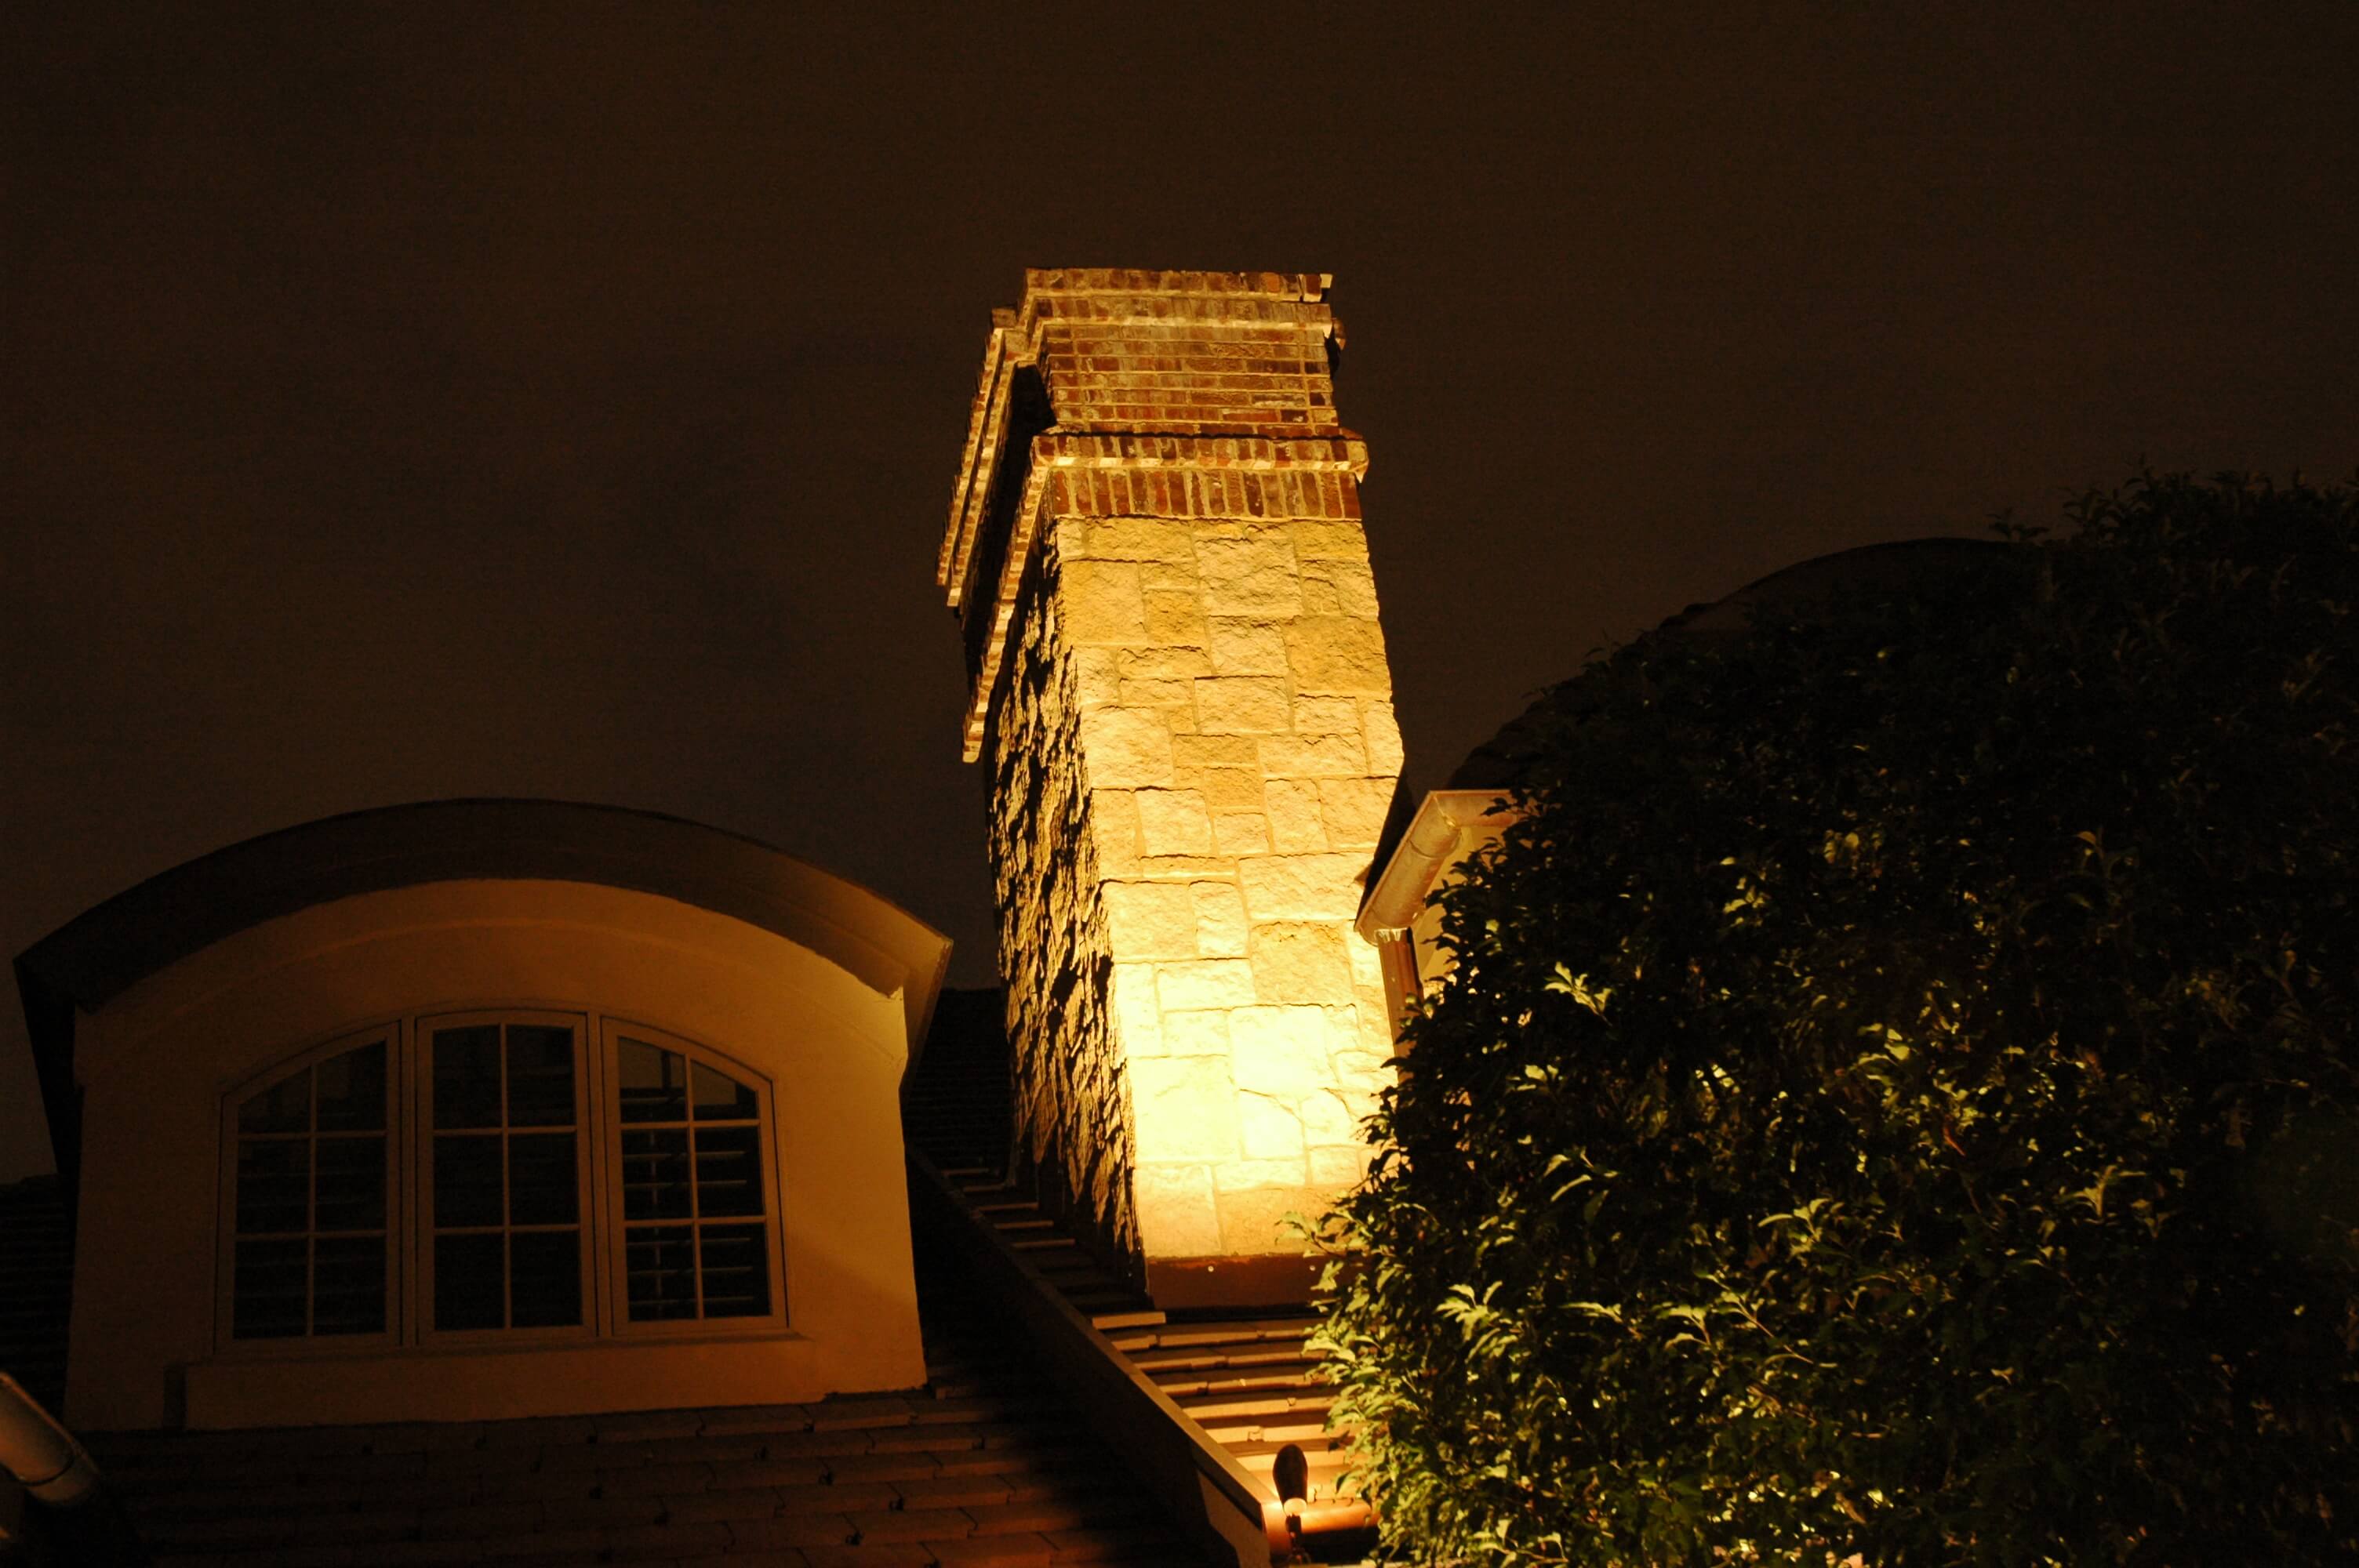 Lighting on chimney